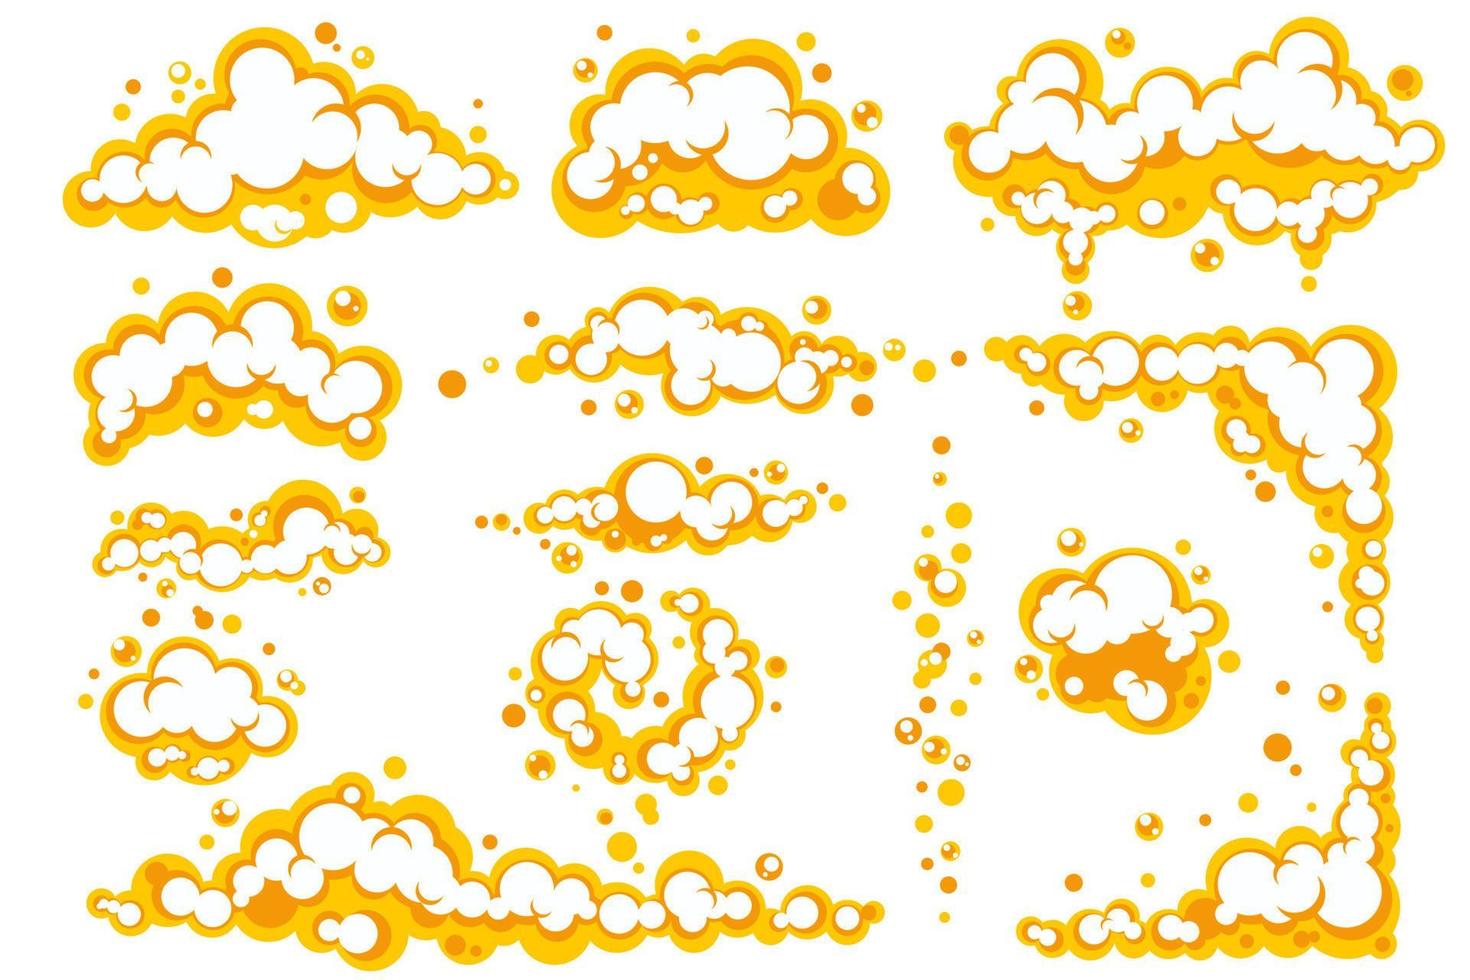 Cartoon beer foam set with bubbles. Vector illustration. EPS 10